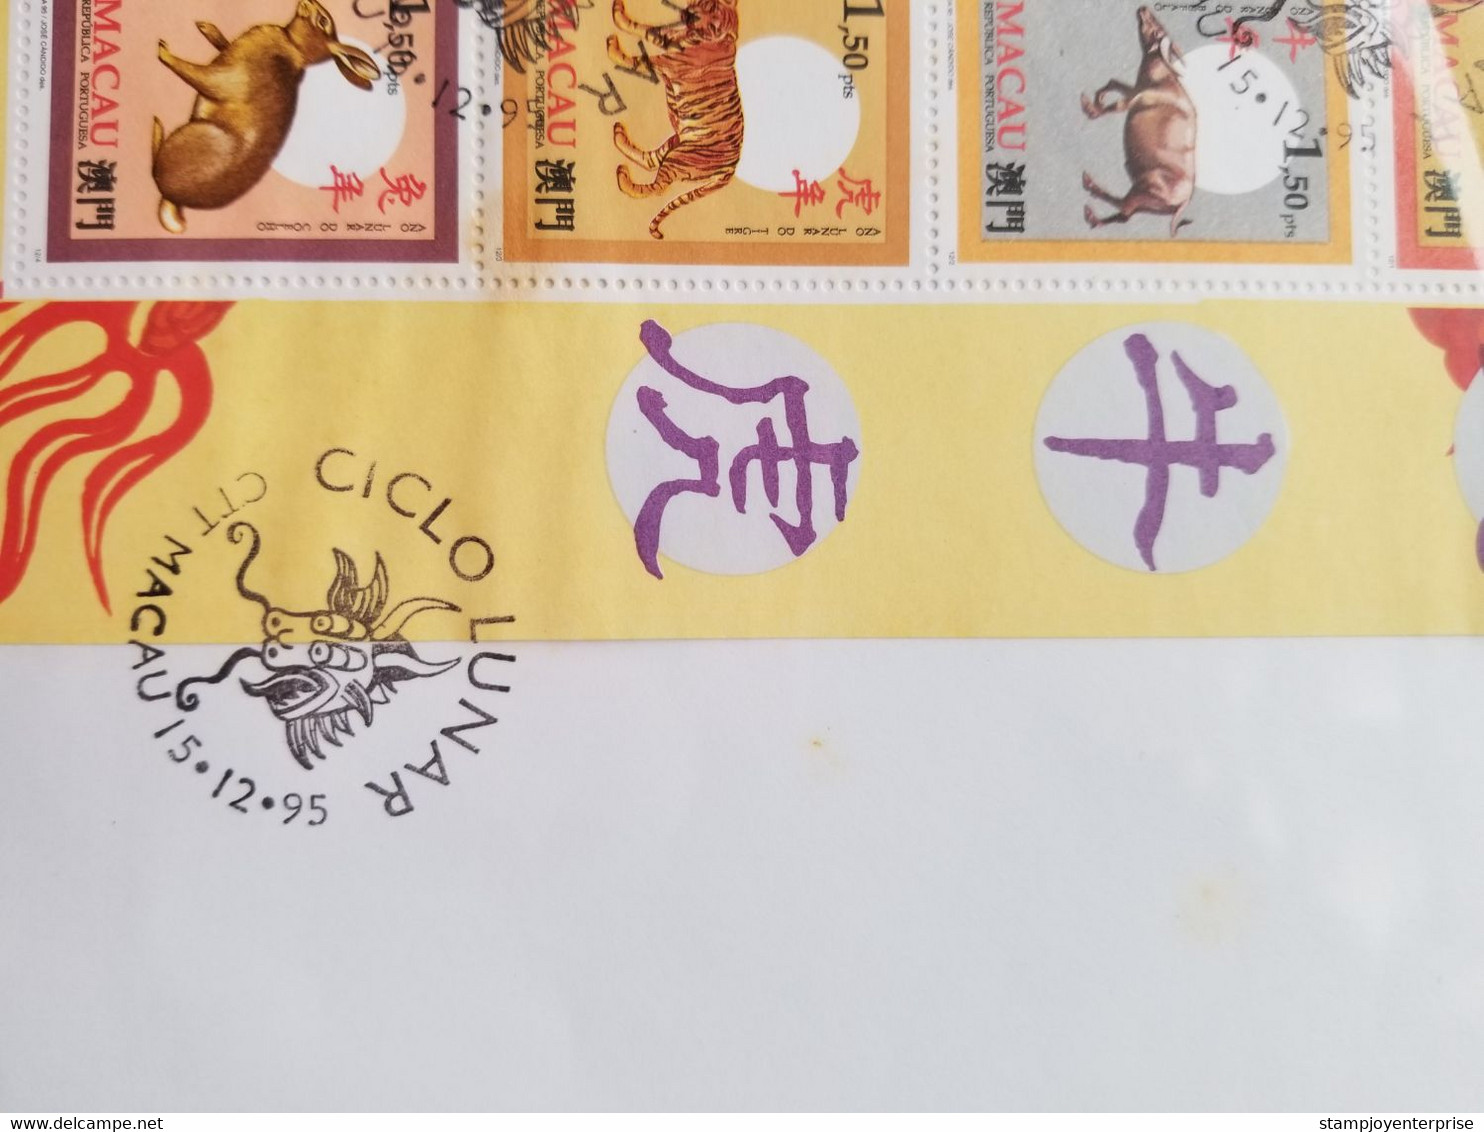 Macau Macao Lunar 12 Circle 1995 Chinese Zodiac Dragon (FDC) *see Scan - Briefe U. Dokumente